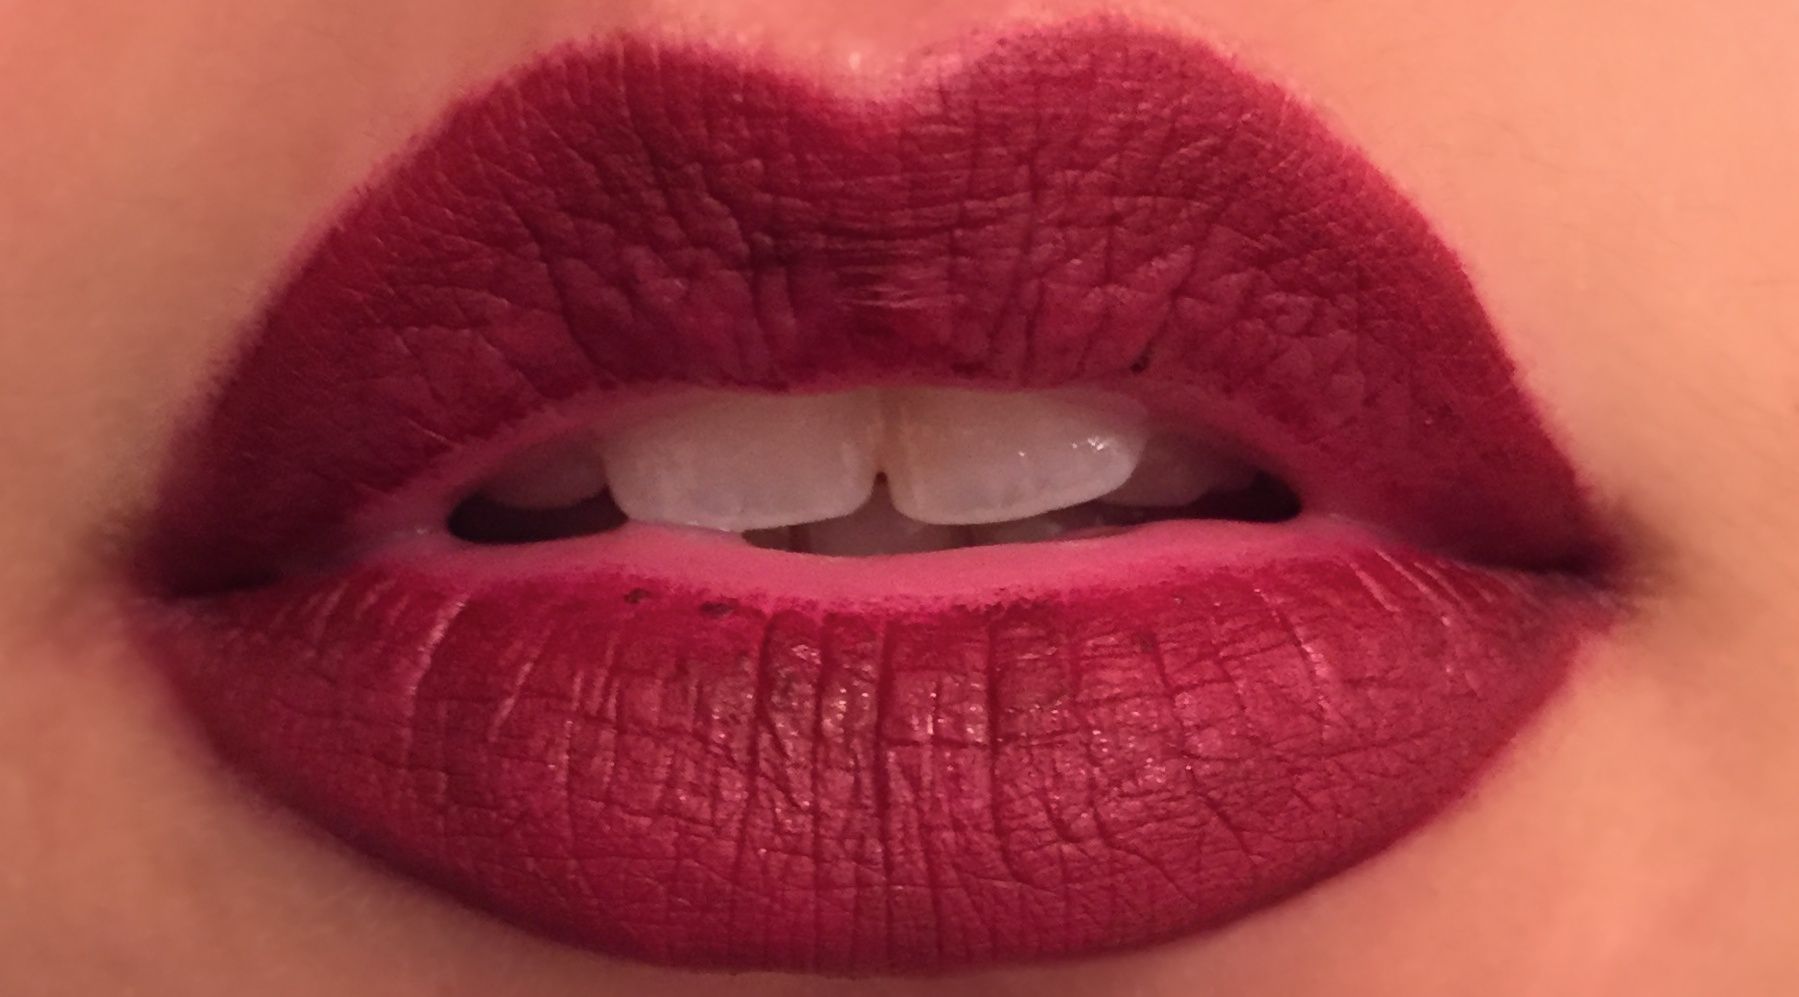 Keeping my liquid lipstick on the inner ... - Beauty Insider Community